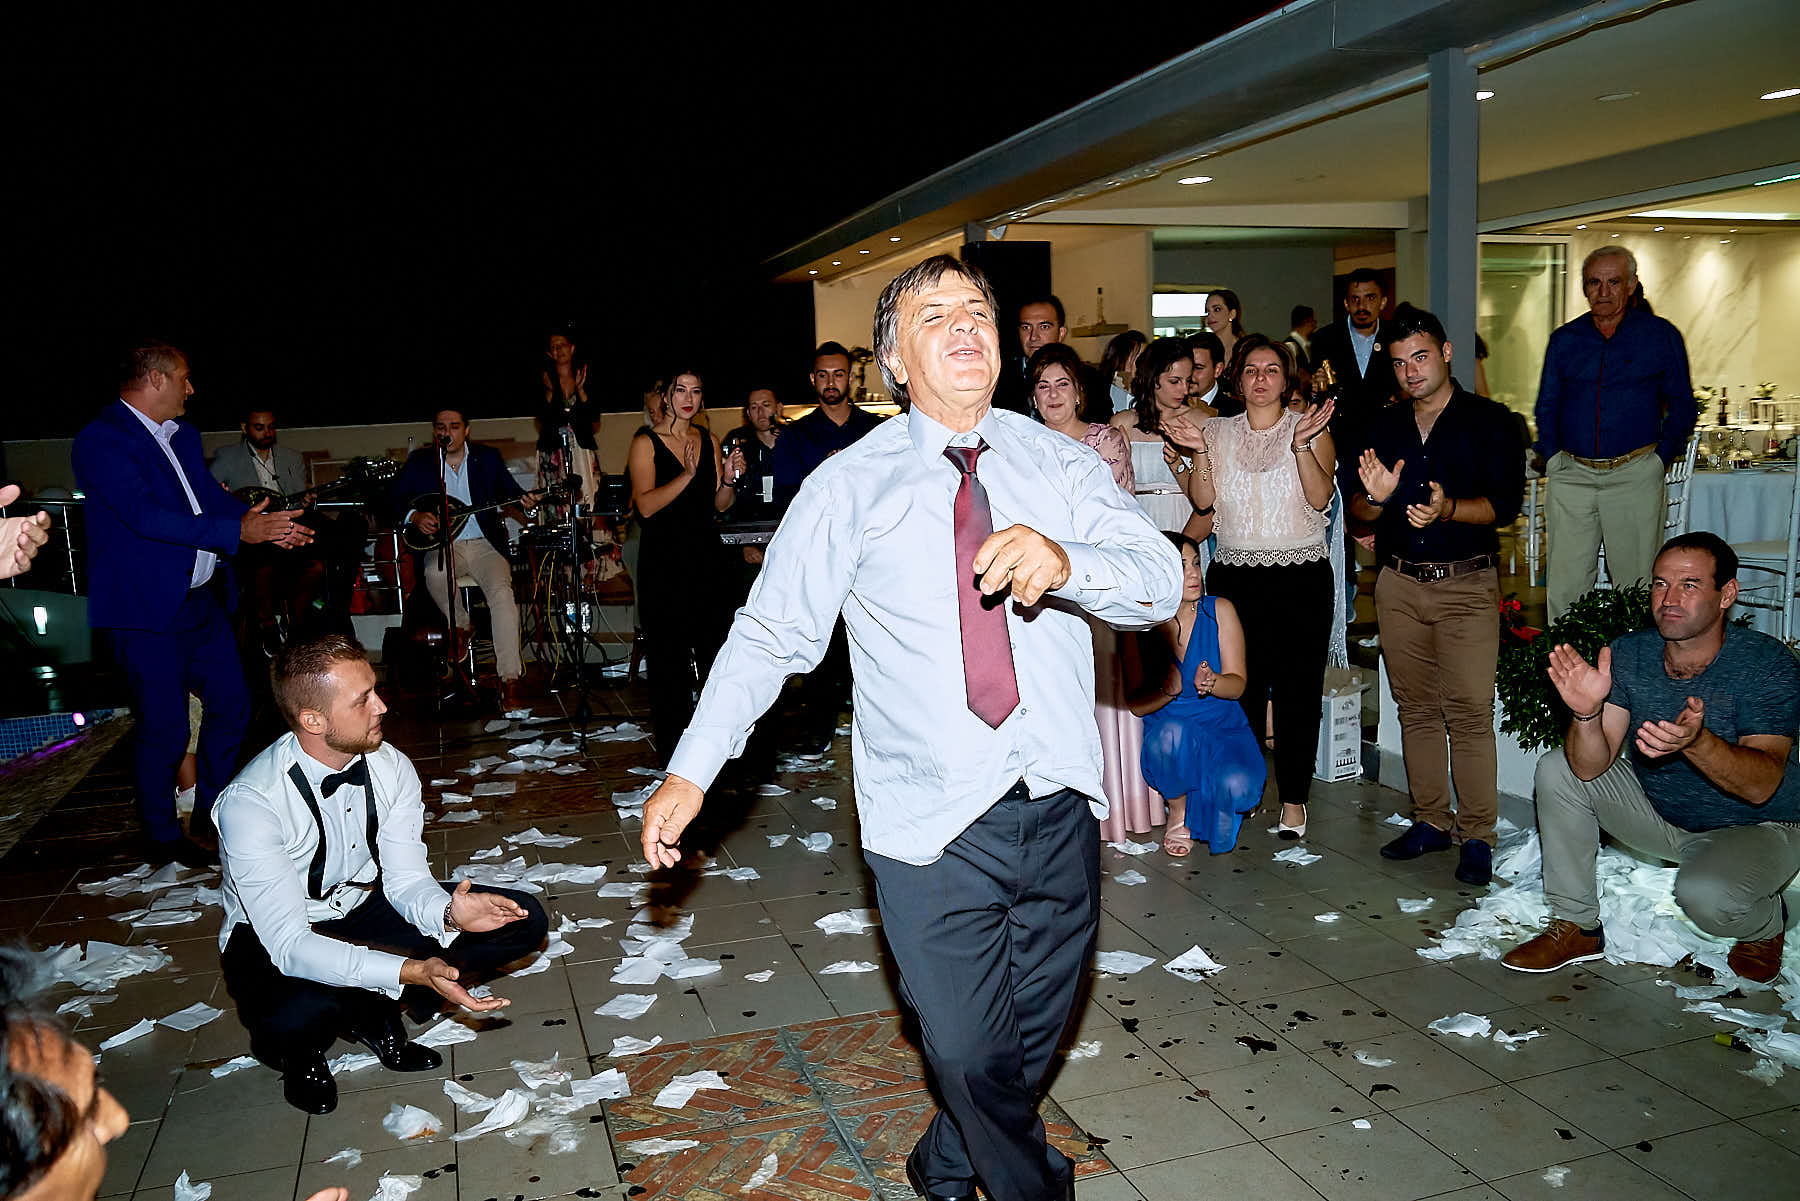 man dancing at wedding ball and people enjoying him and clapping